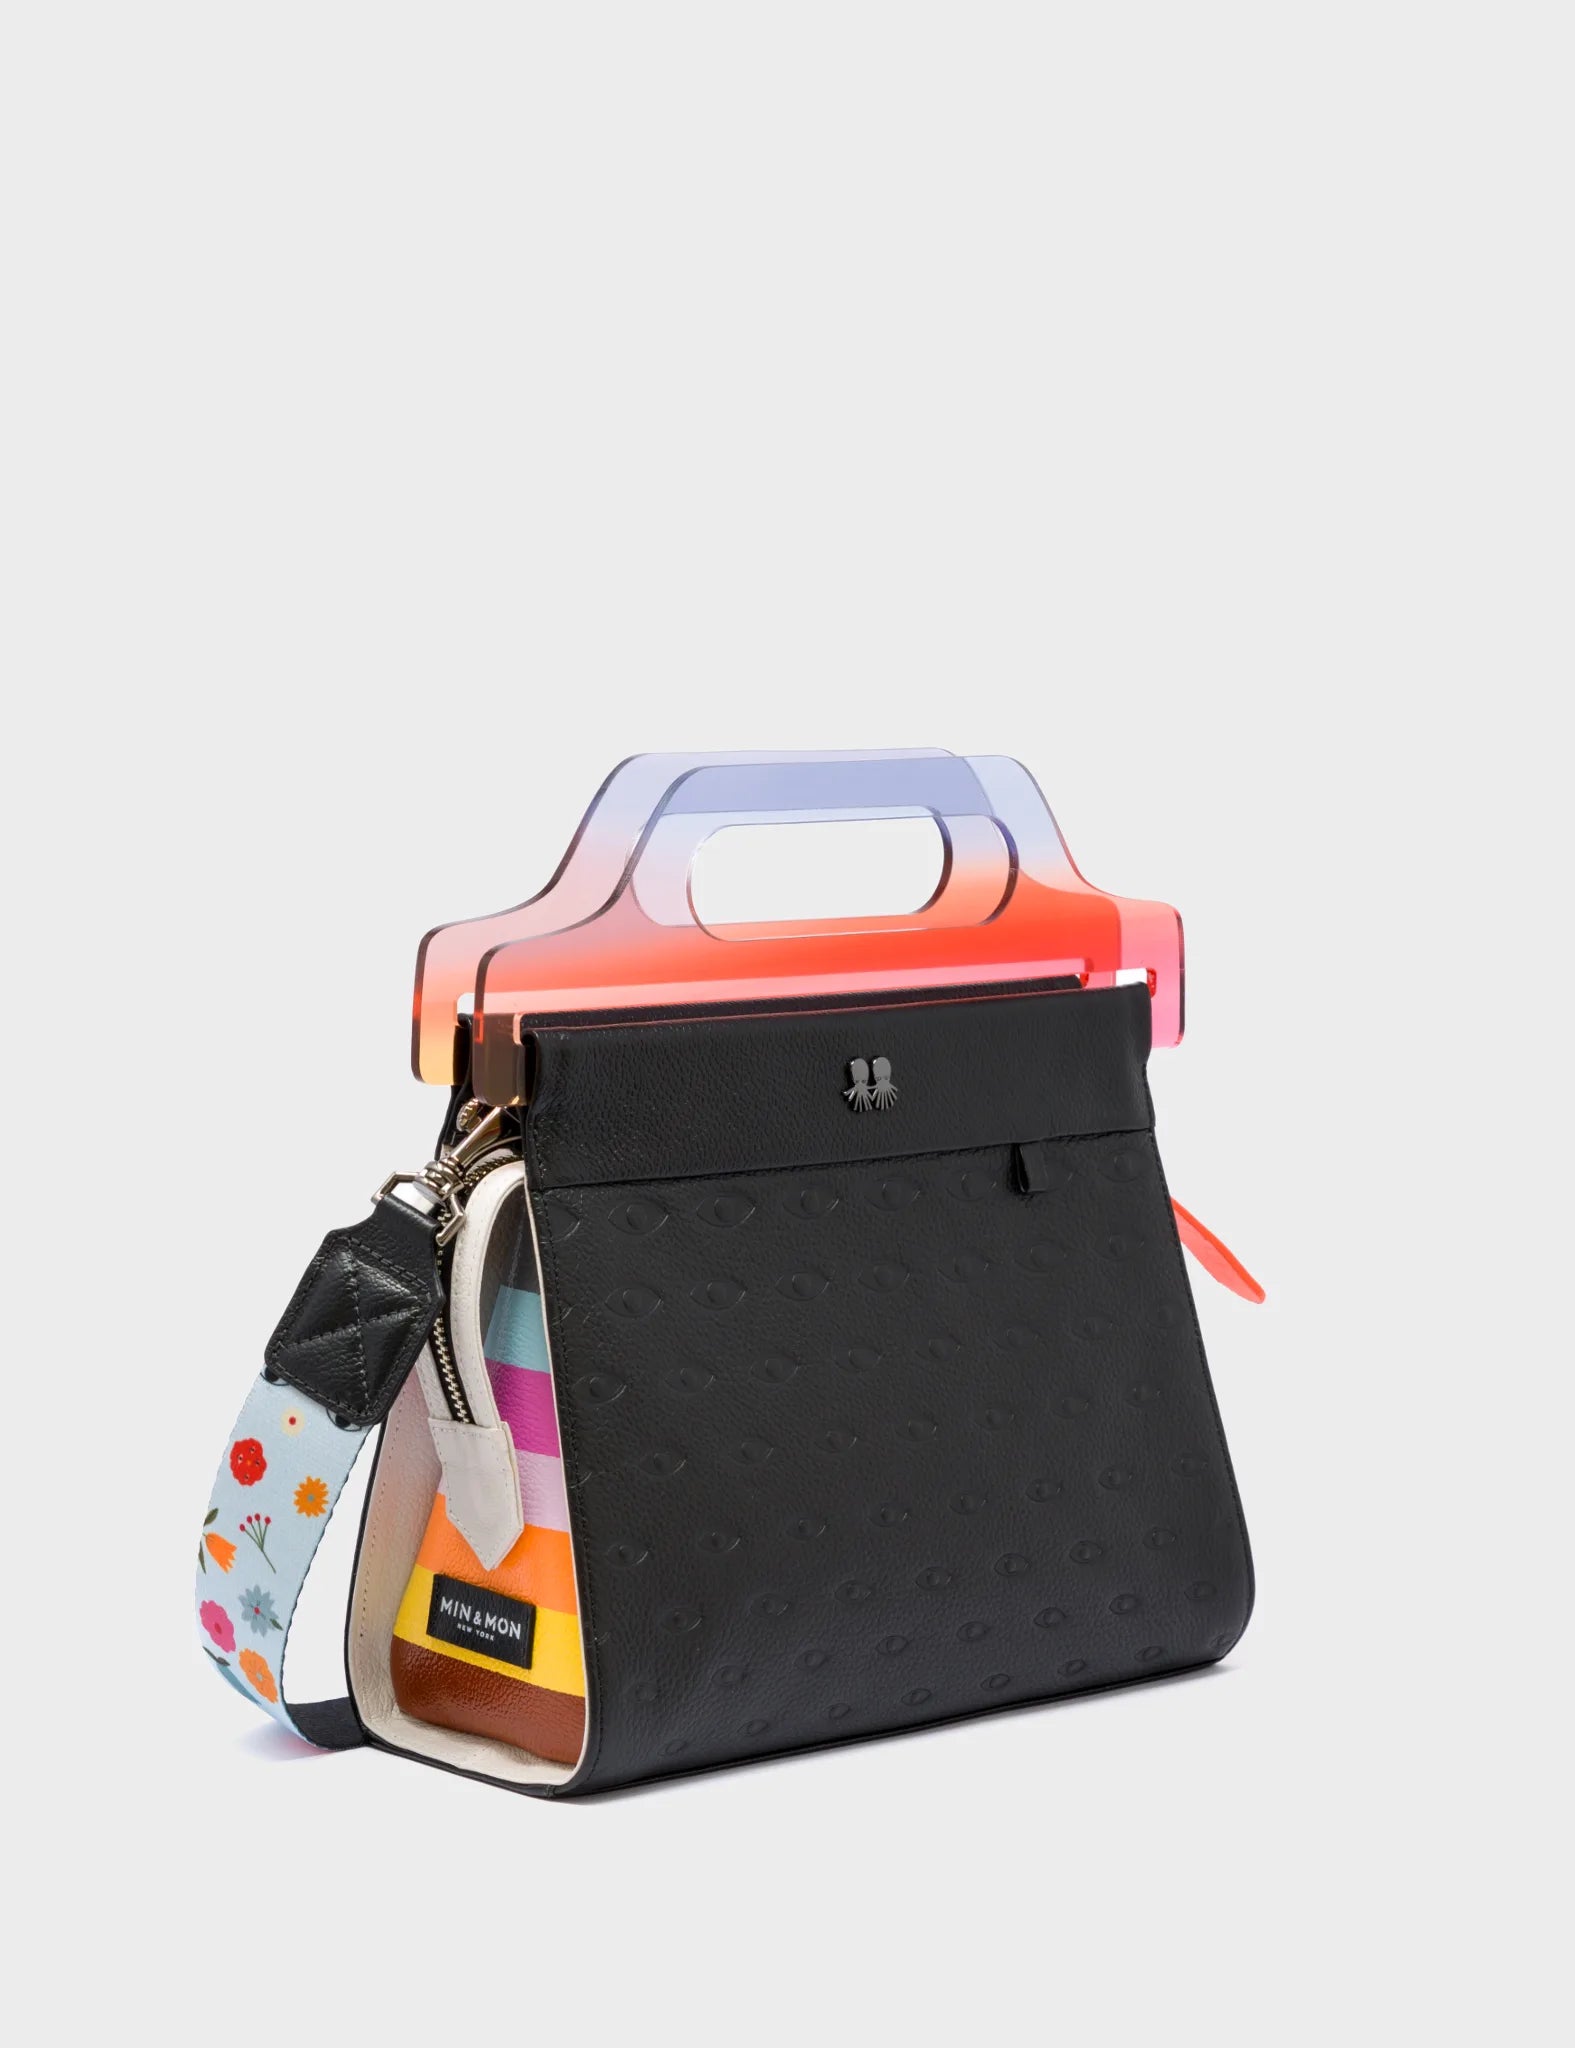 Black Leather Crossbody Handbag Plastic Handle - Groovy Rainbow Design